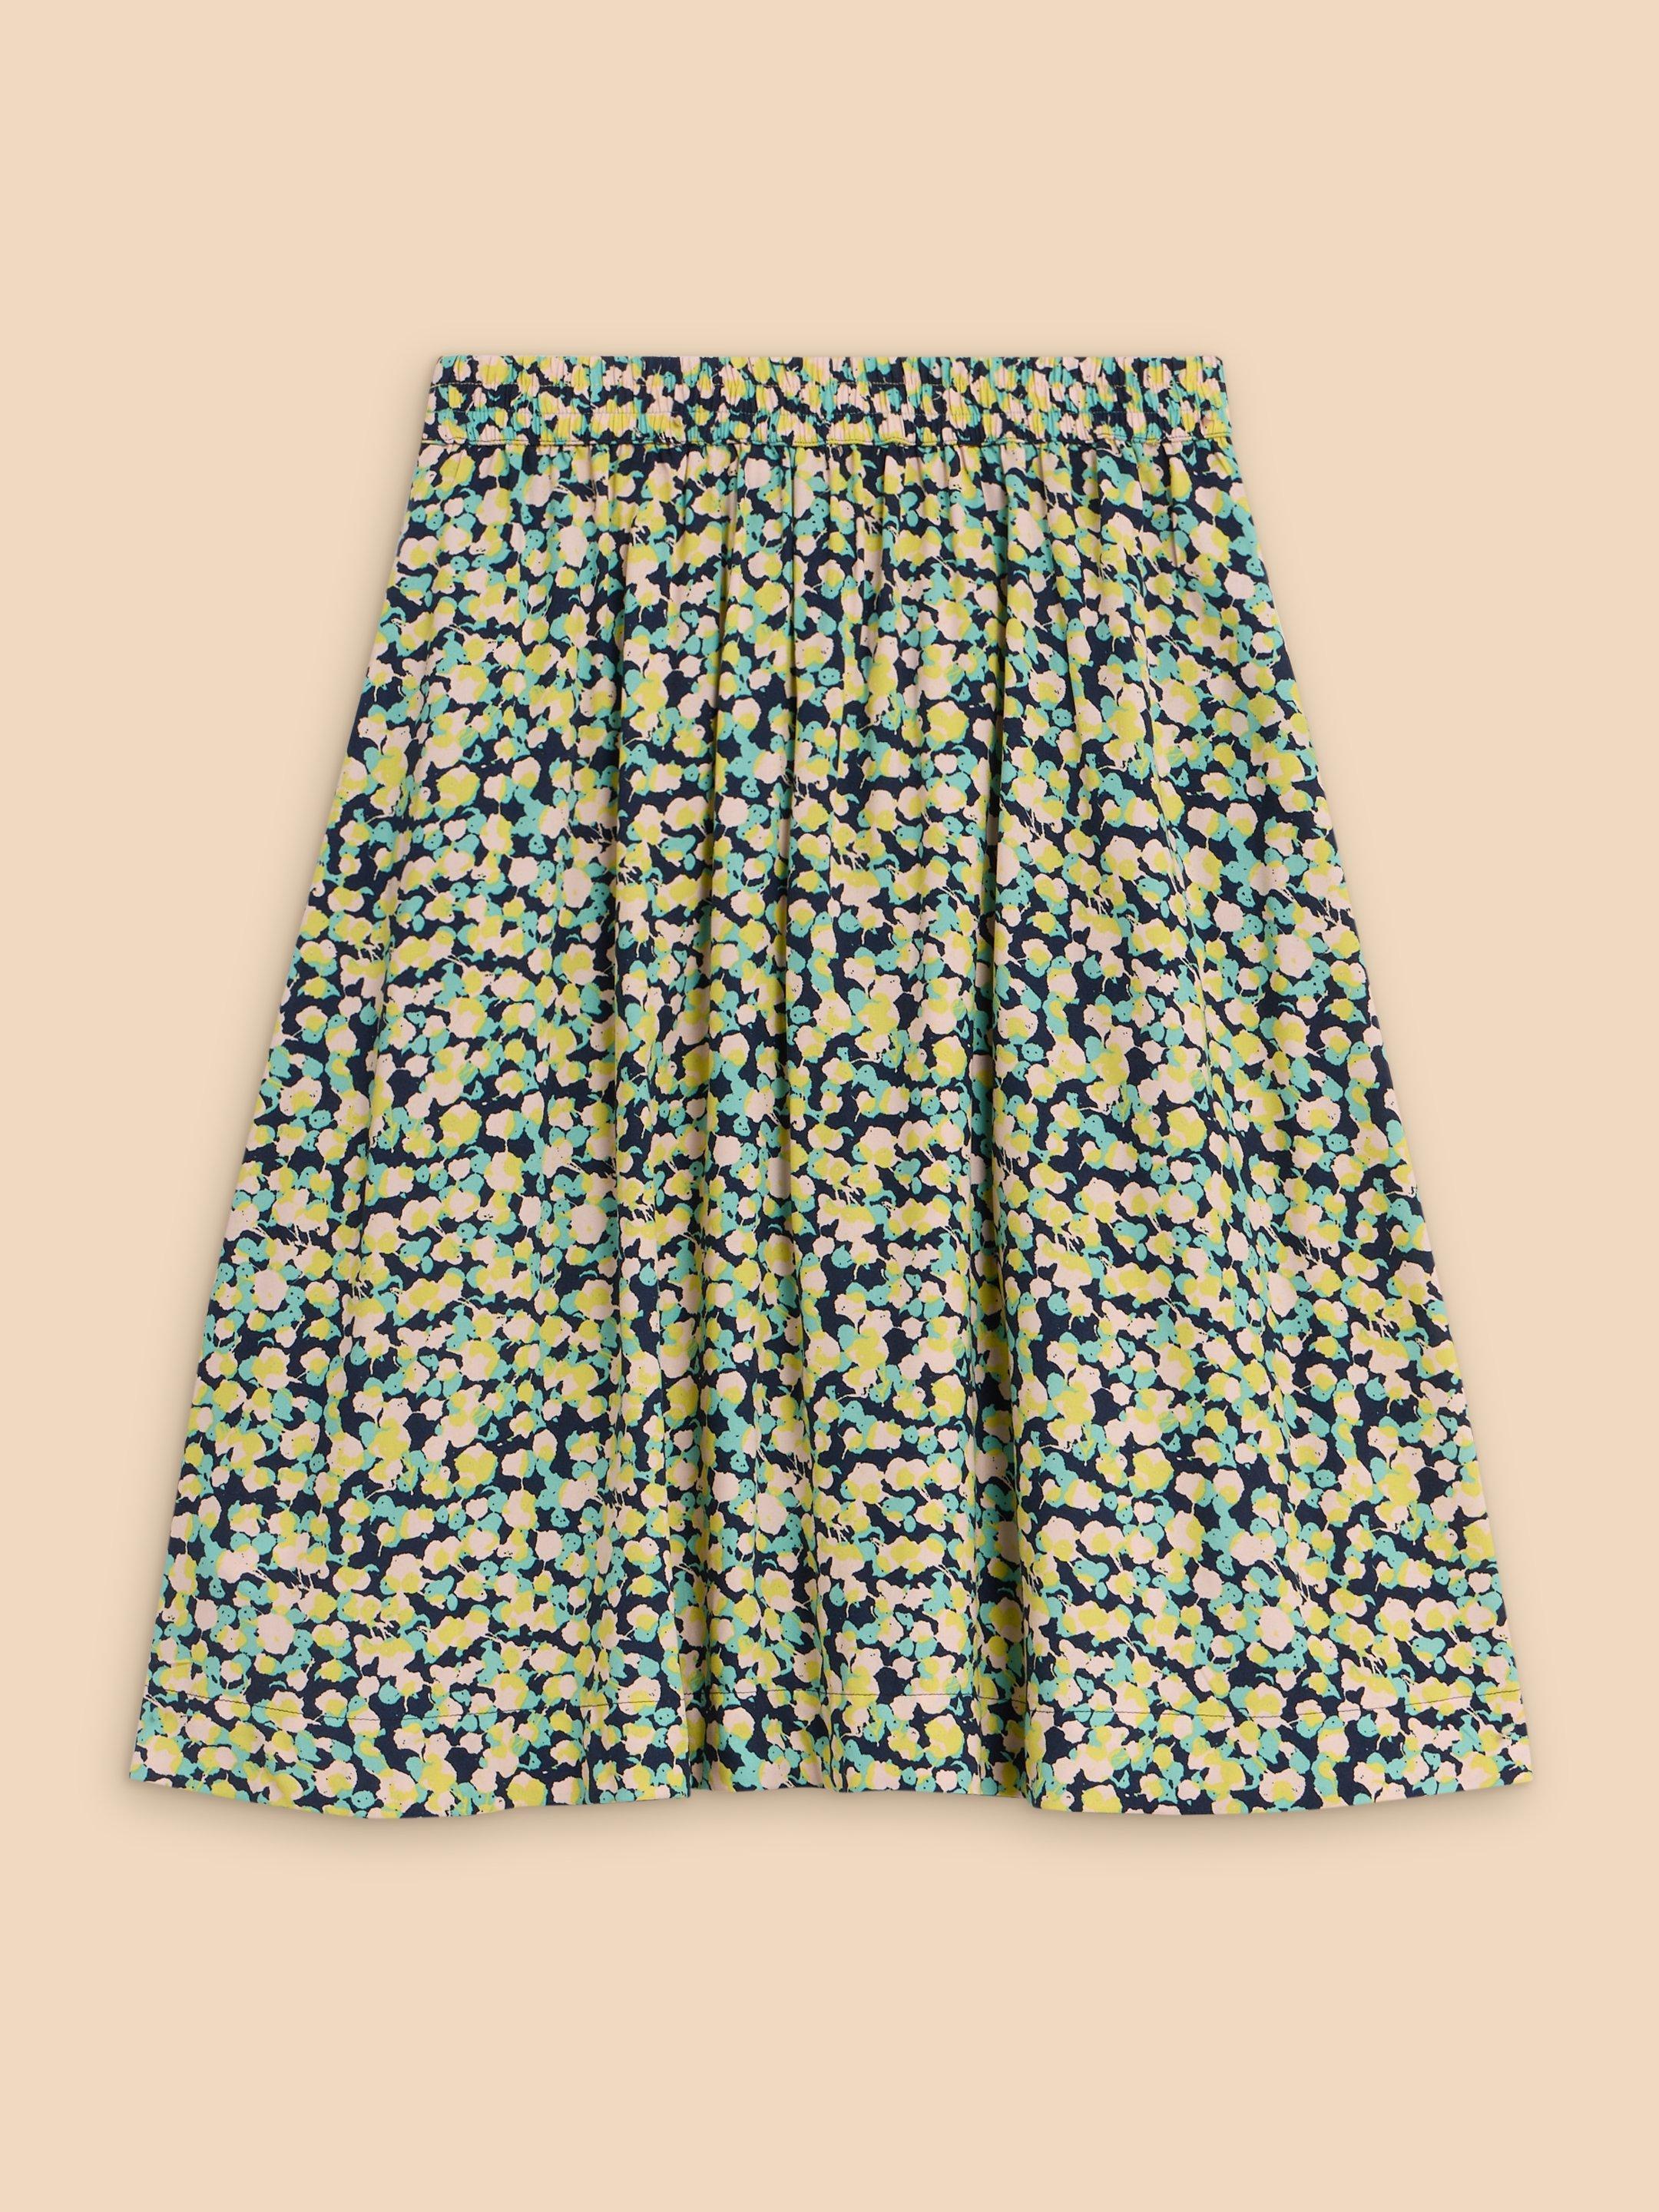 Sarah Eco Vero Knee Skirt in NAVY PR - FLAT BACK